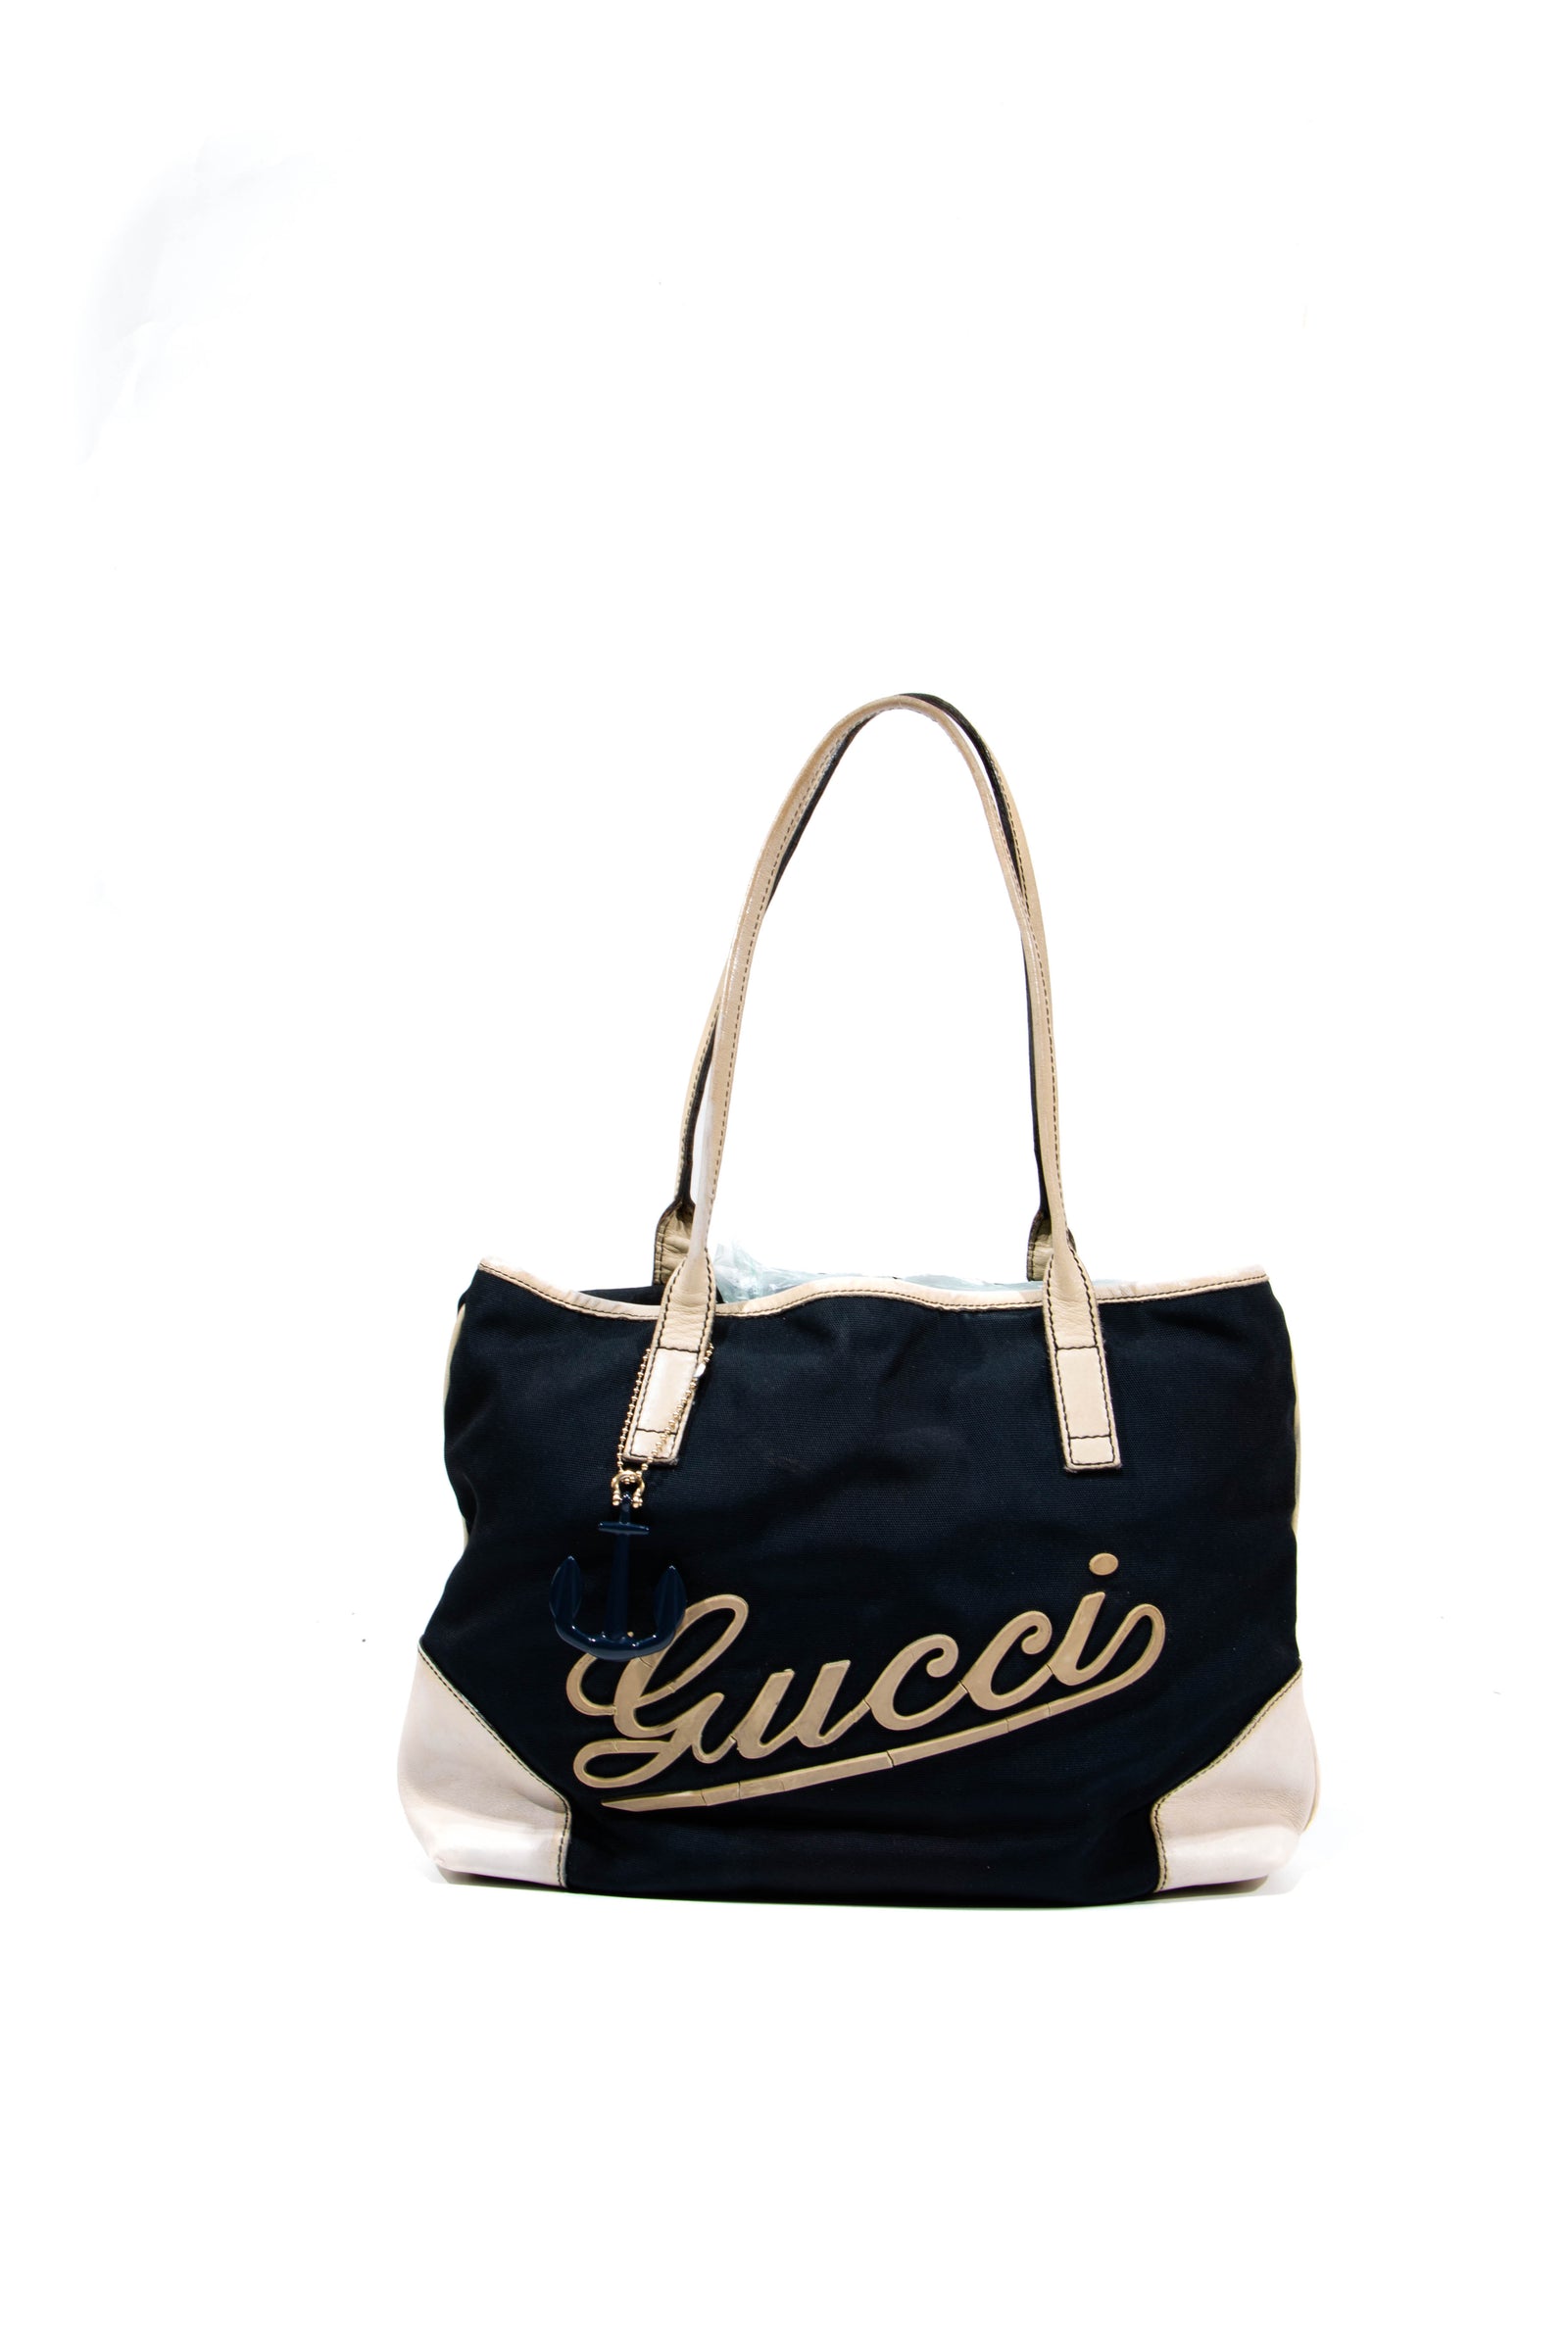 Gucci - Authenticated Hobo Handbag - Cotton Black Plain for Women, Very Good Condition